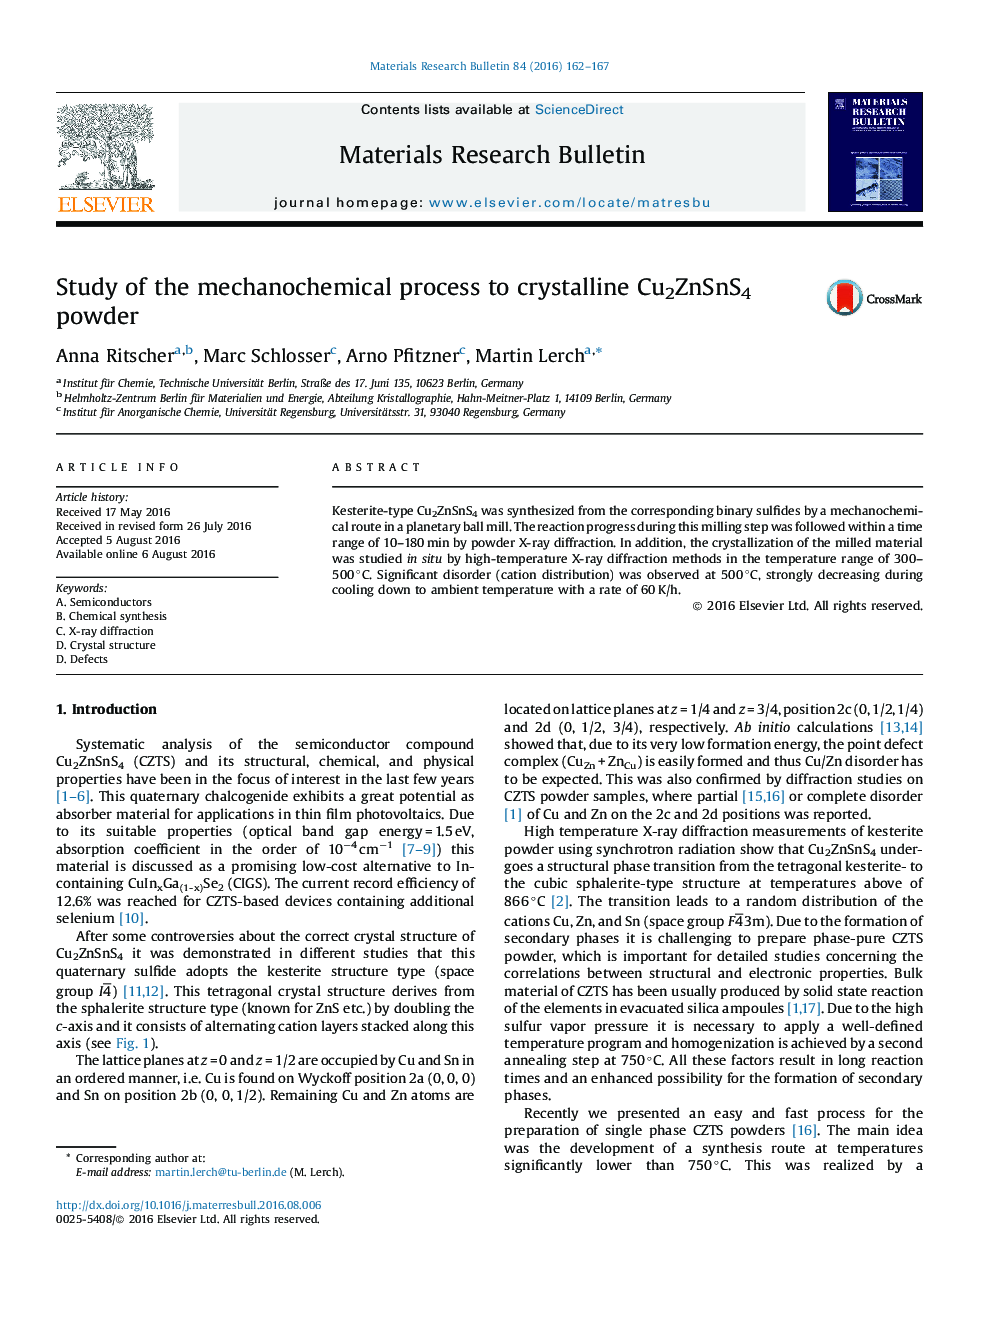 Study of the mechanochemical process to crystalline Cu2ZnSnS4 powder